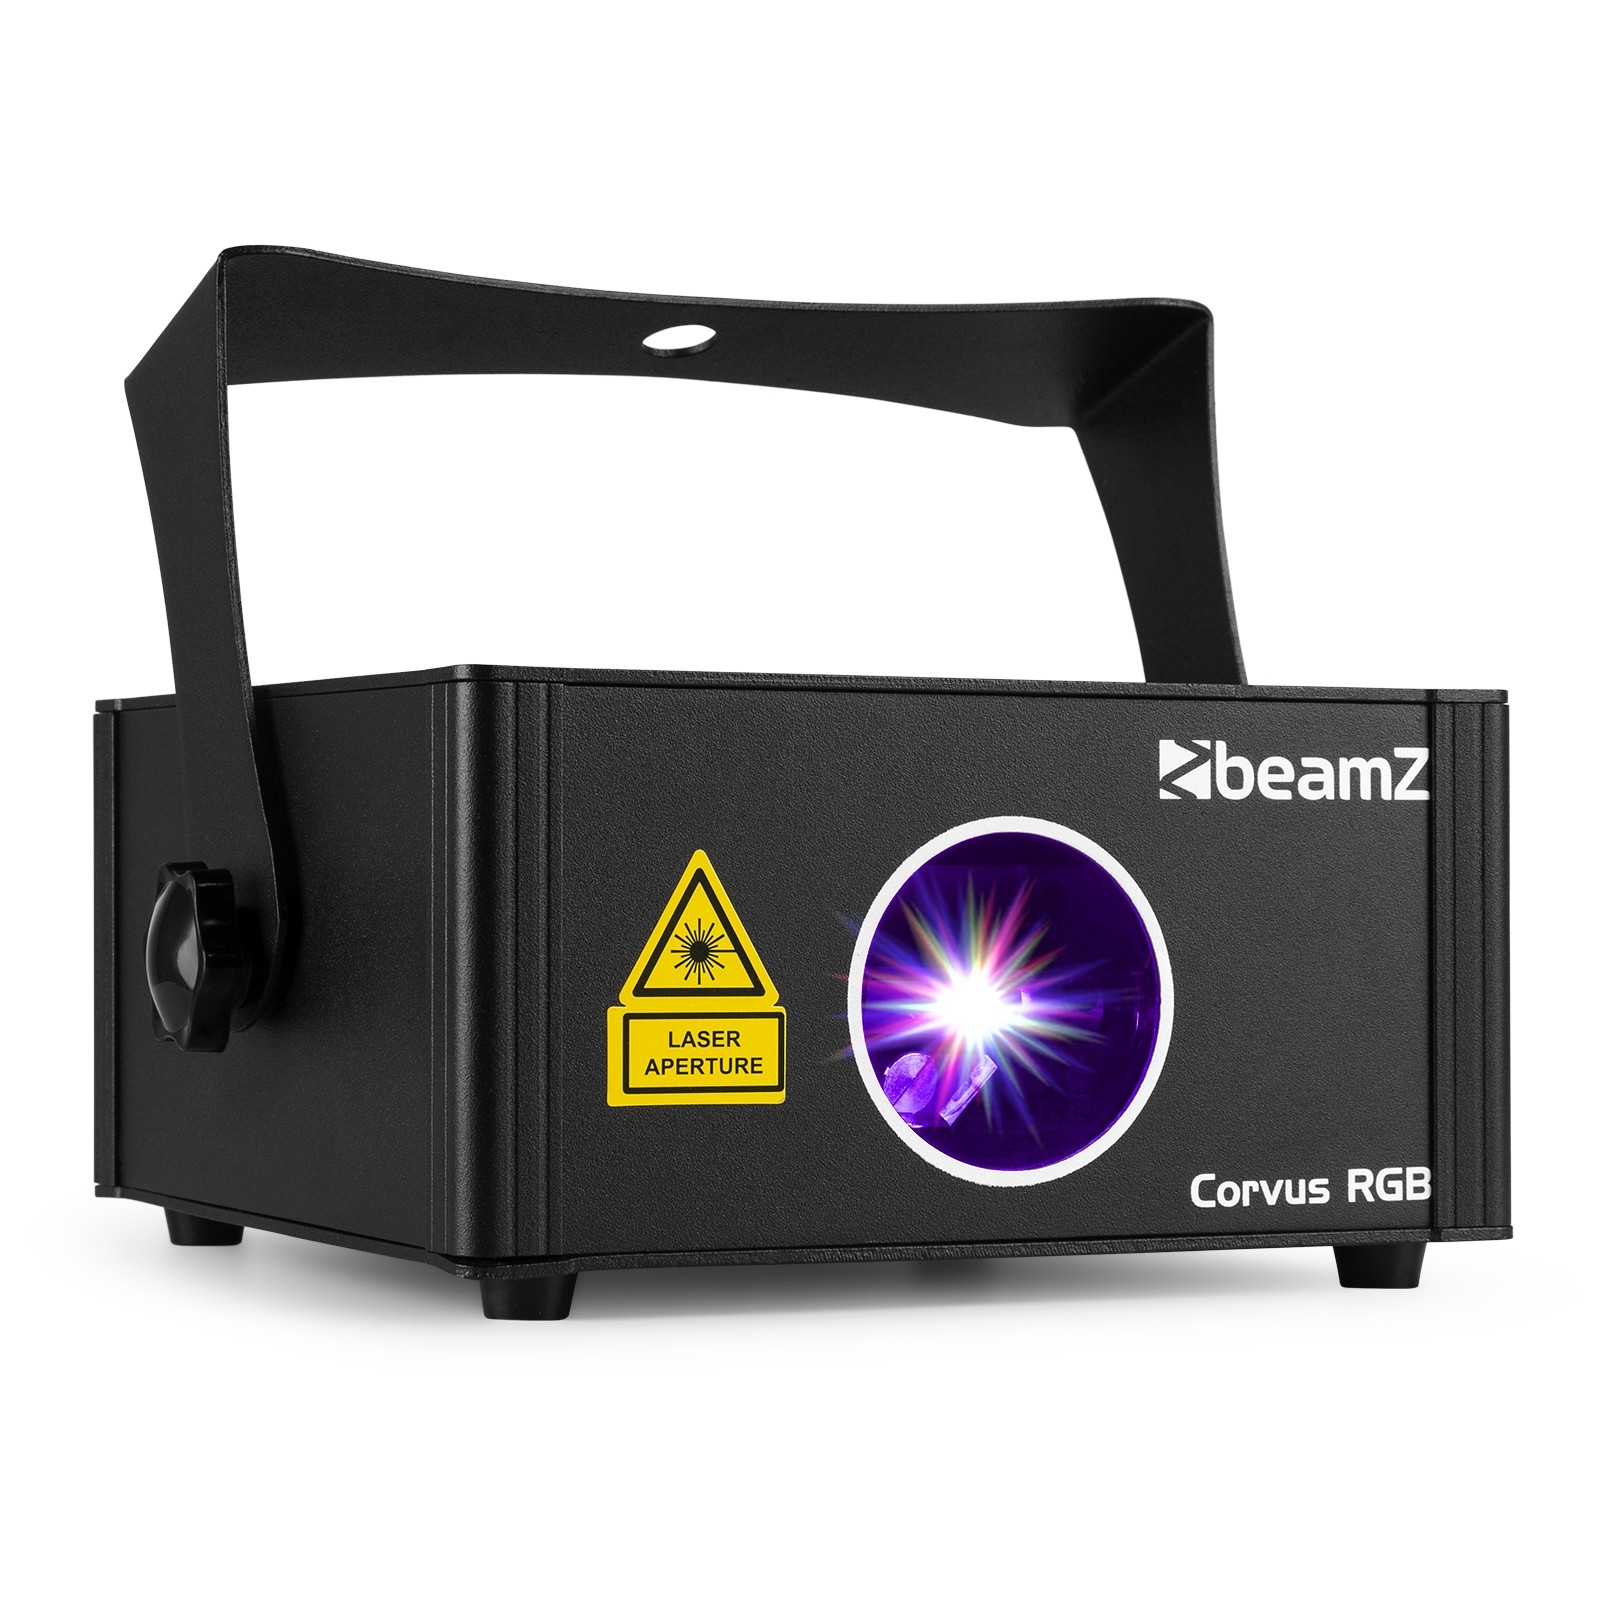 Corvus RGB Scan laser